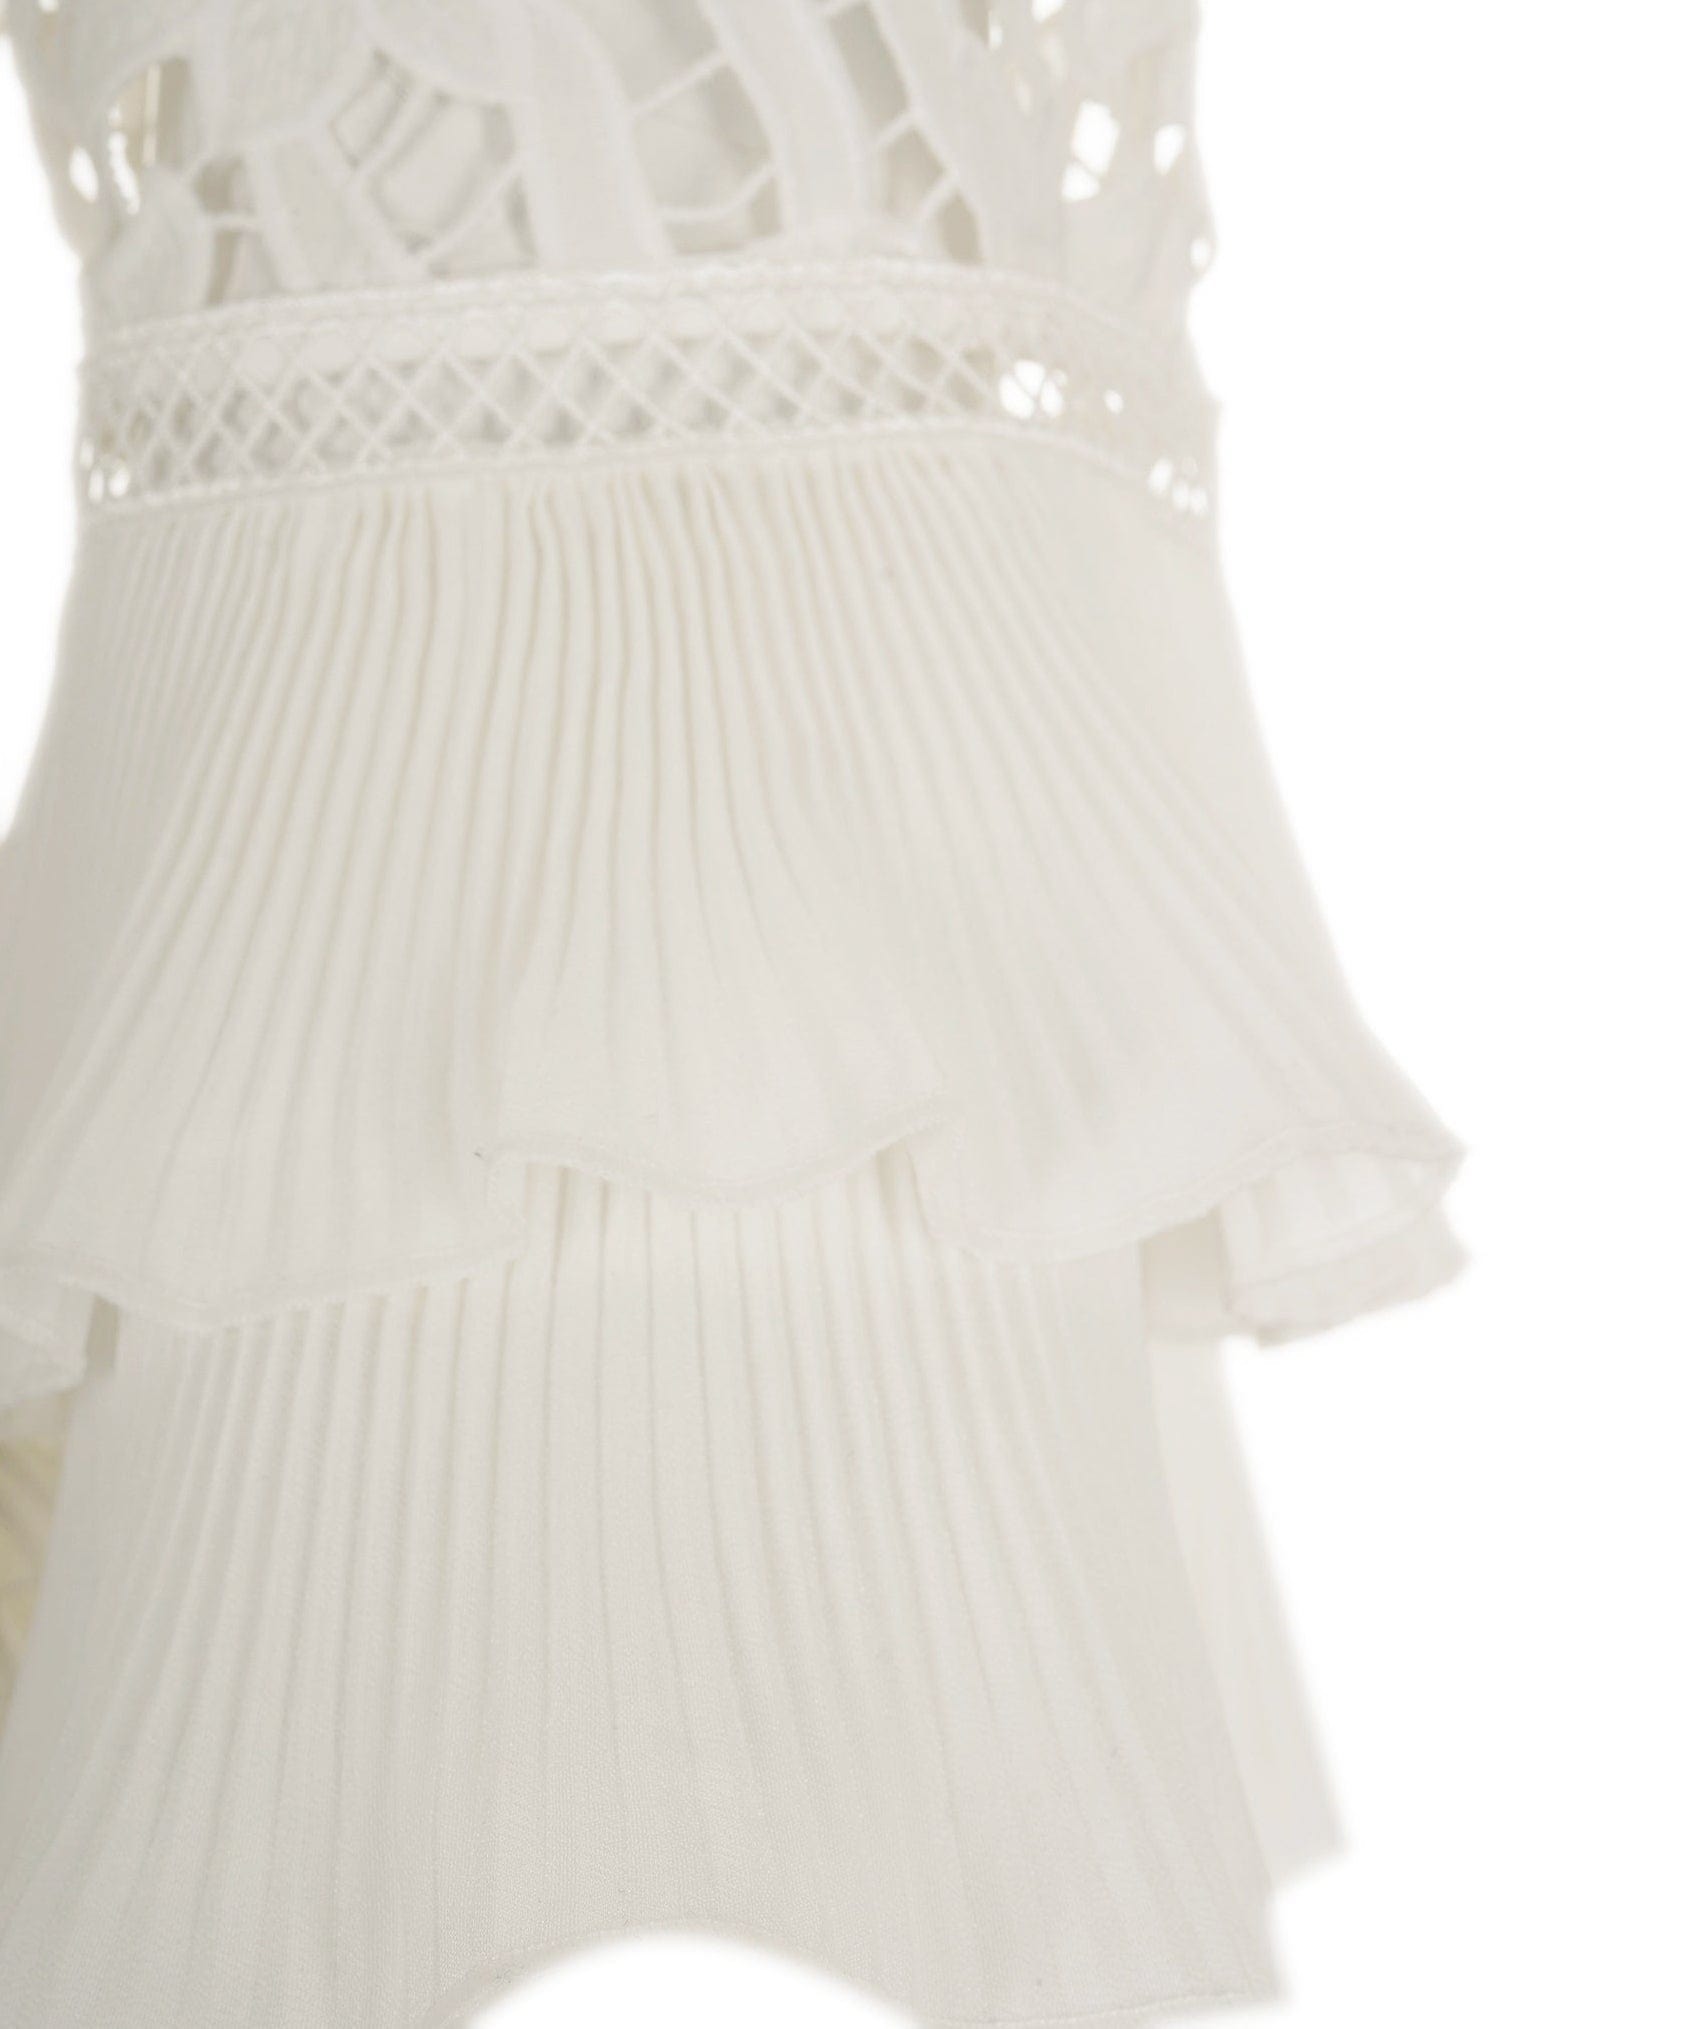 Christian Dior Self Potrait White Dress ALC0818